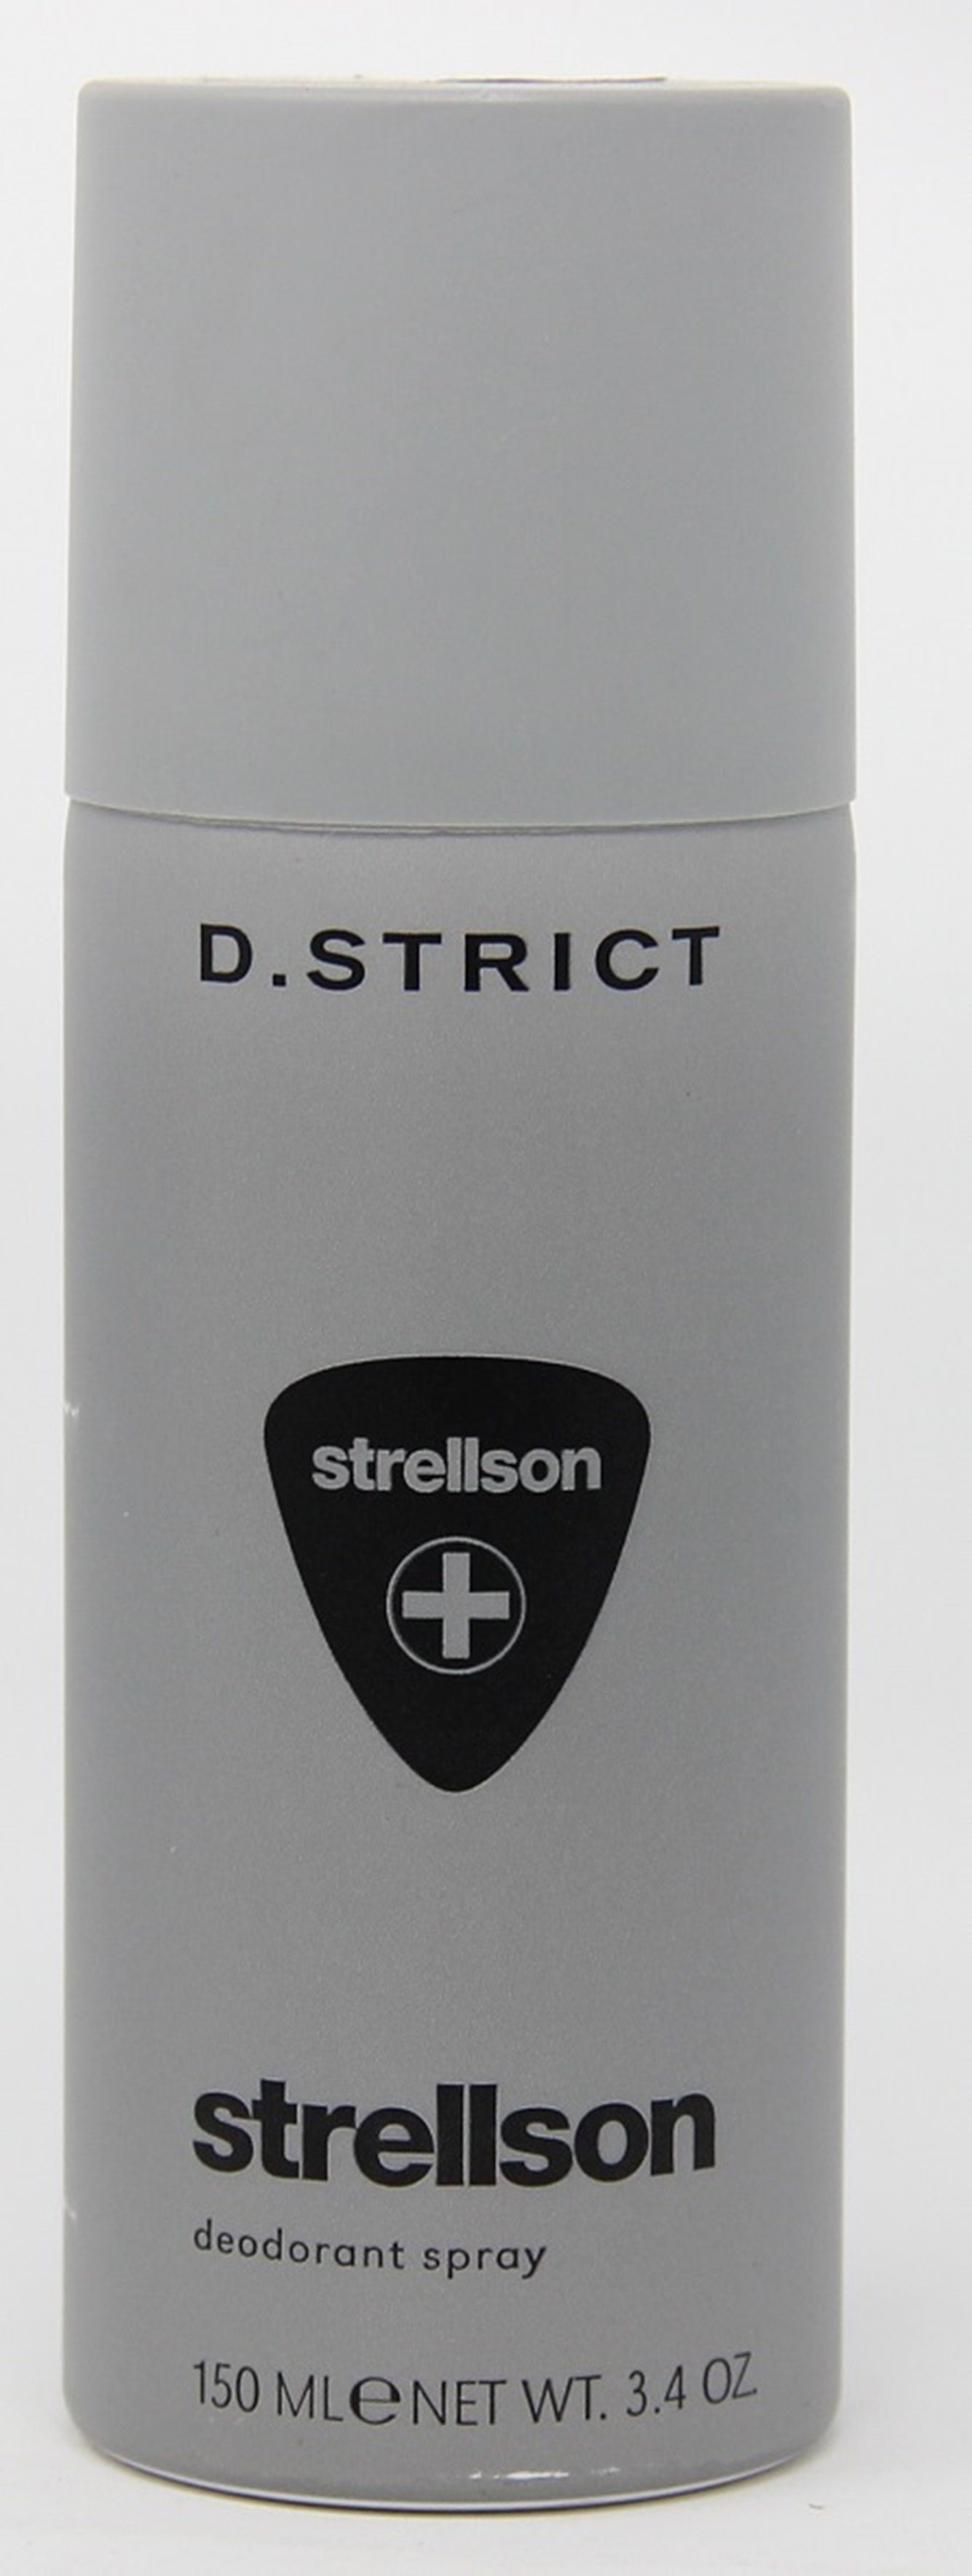 Strellson Deo-Spray Strellson D.Strict Deodorant Spray 150ml